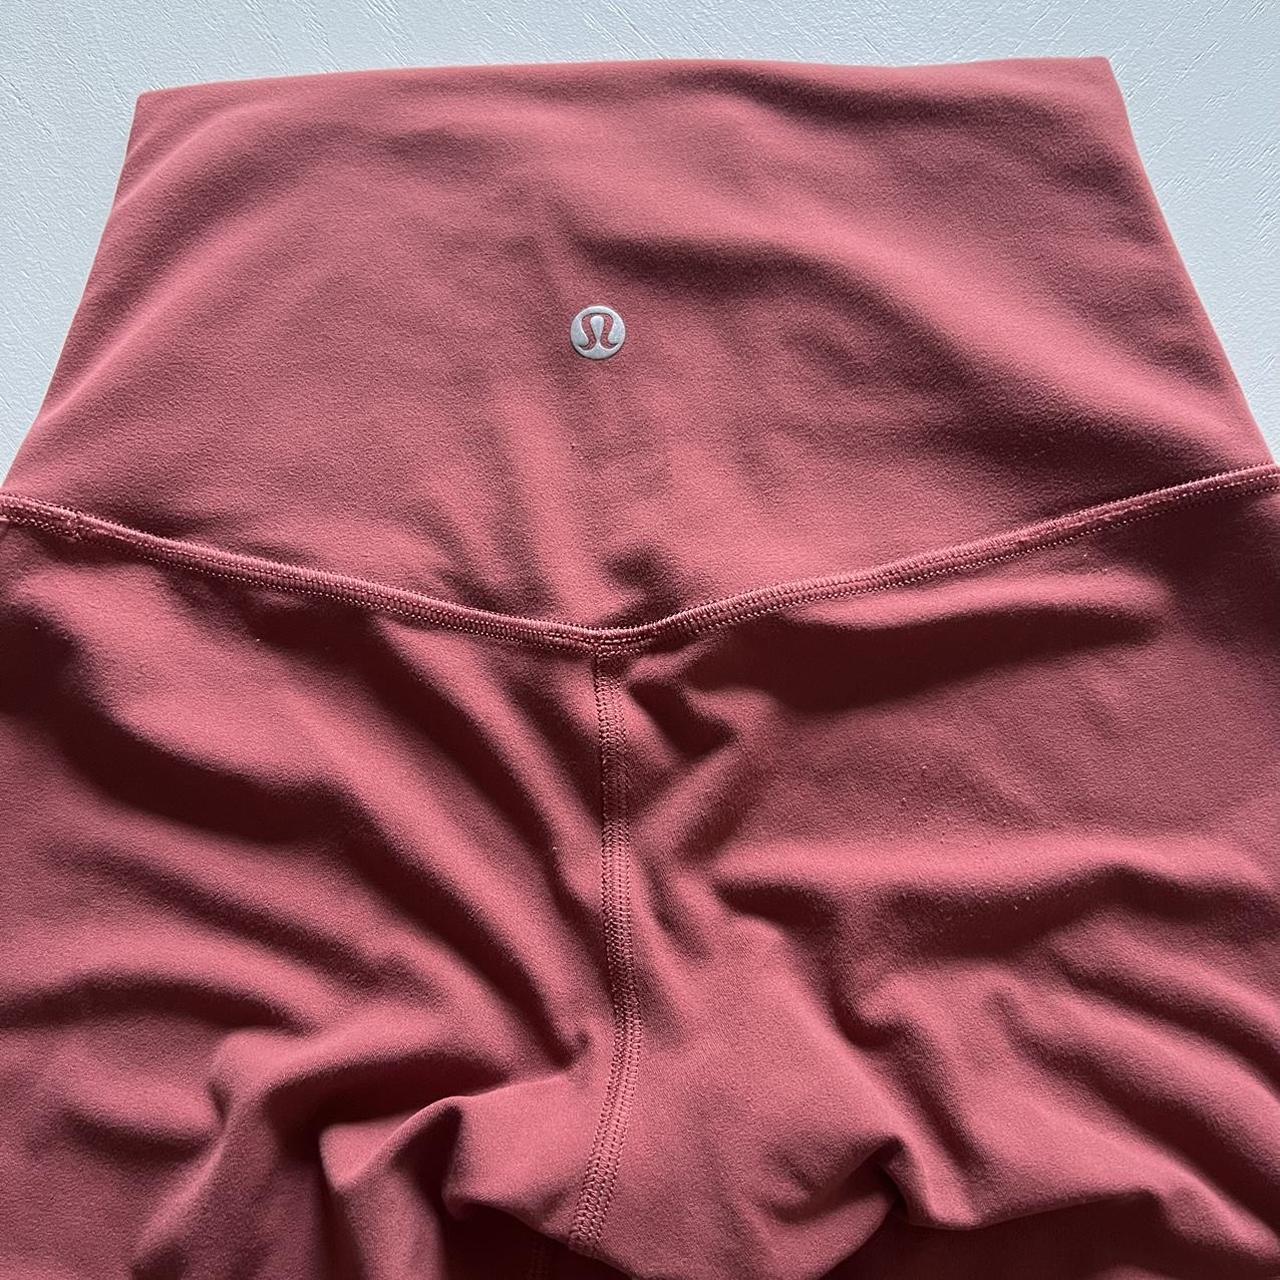 Lululemon Align 23” legging in pinkish reddish - Depop